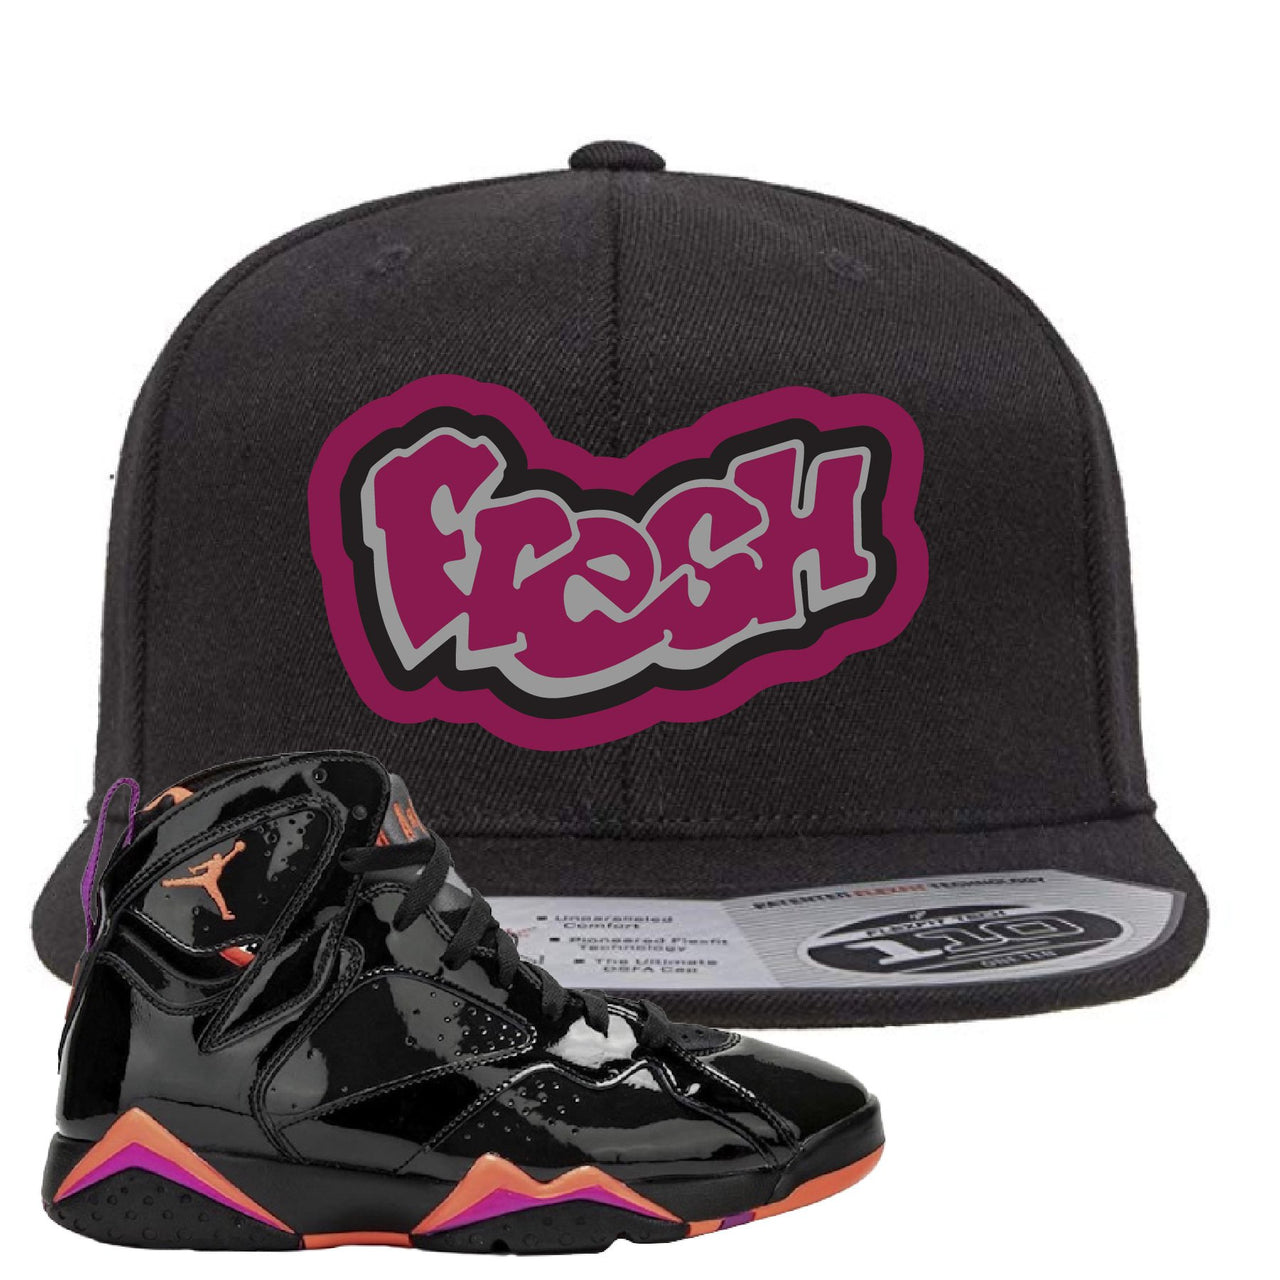 Jordan 7 WMNS Black Patent Leather Fresh Black Sneaker Hook Up Snapback Hat